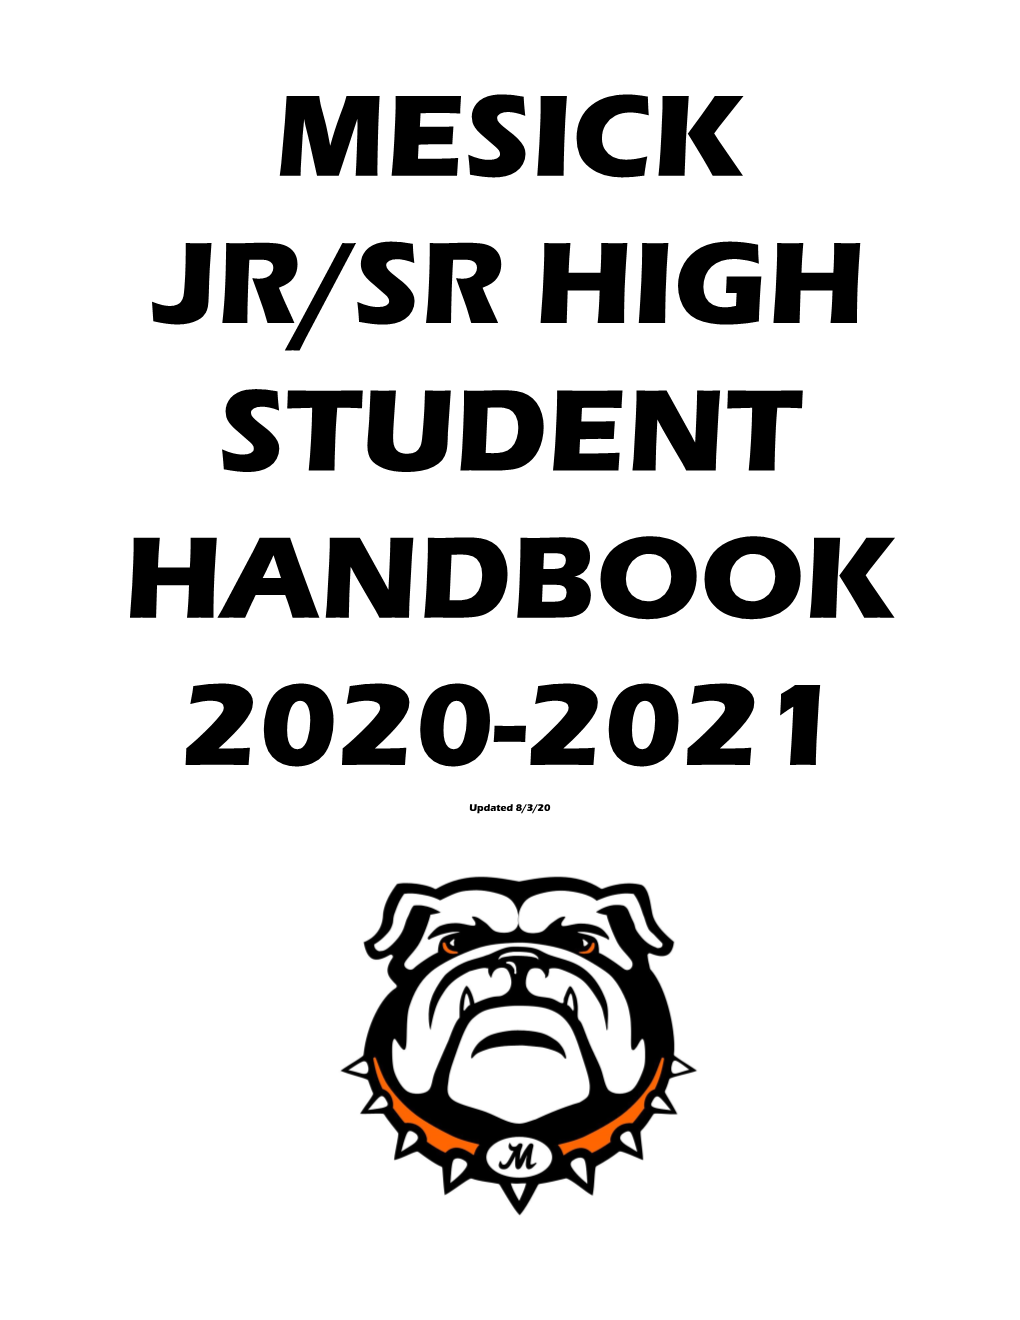 Mesick JRSR Handbook 2020-2021